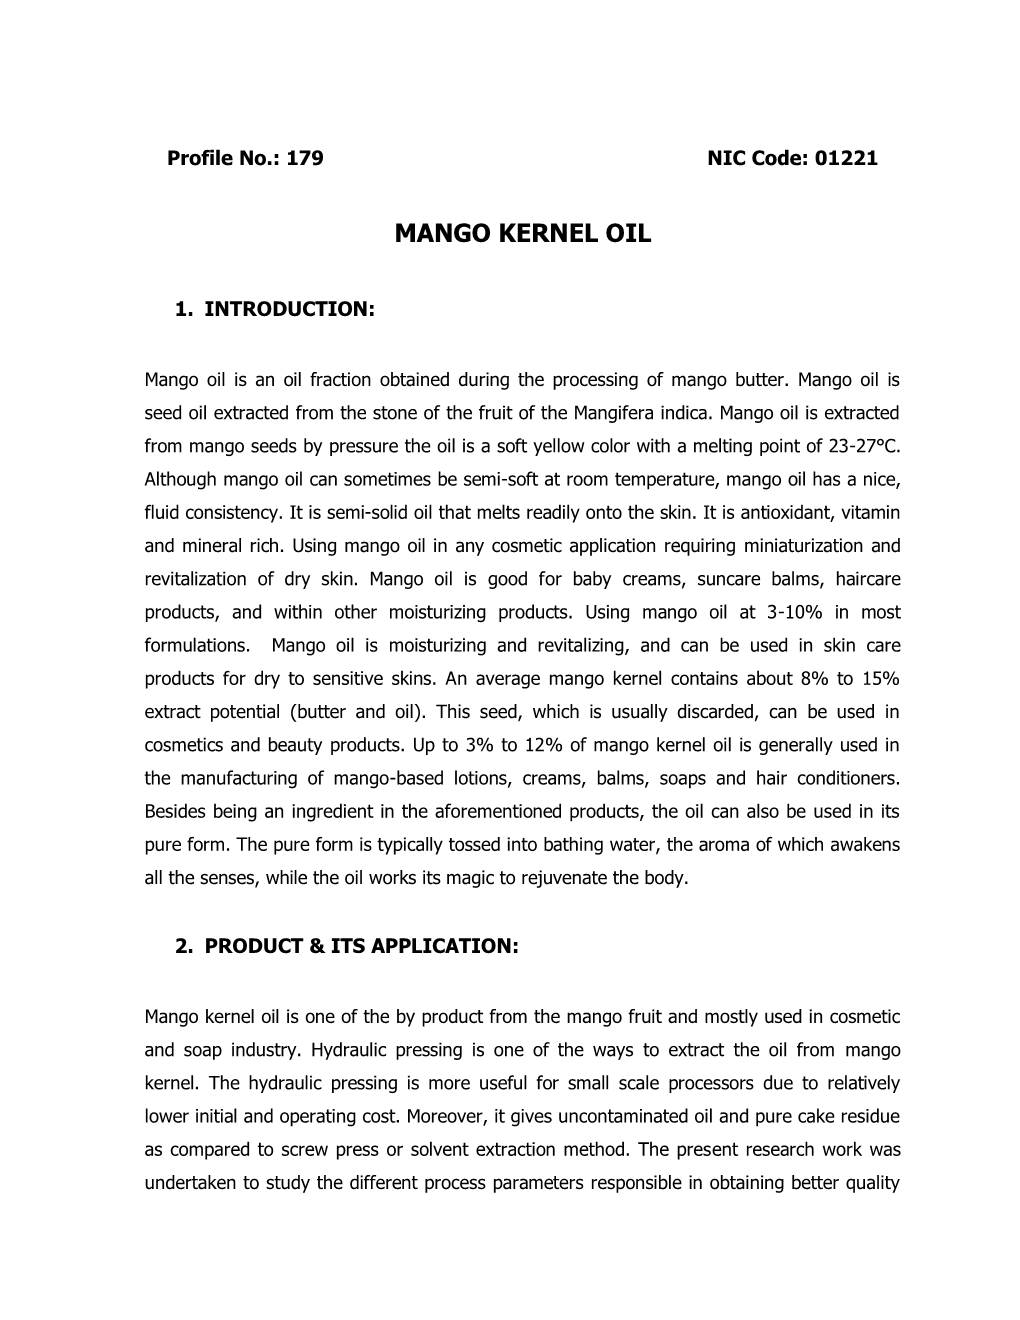 Mango Kernel Oil